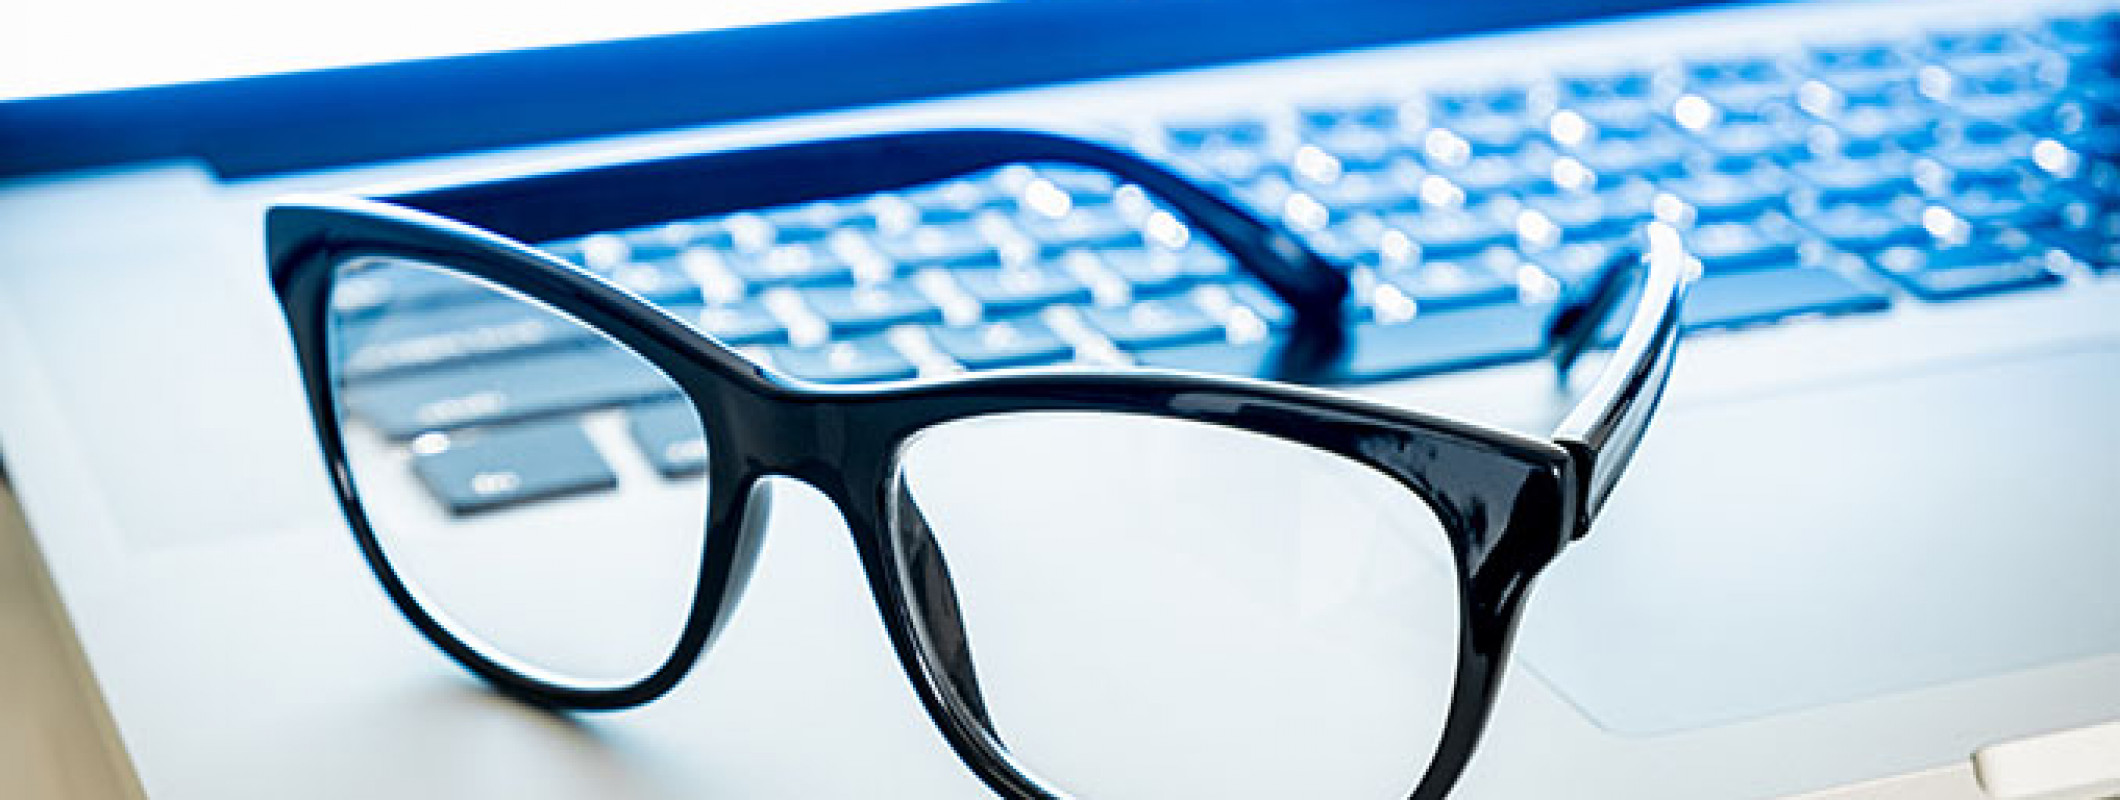 Apakah Kacamata Anti Blue Light Bisa Lindungi Mata dari Layar Gadget